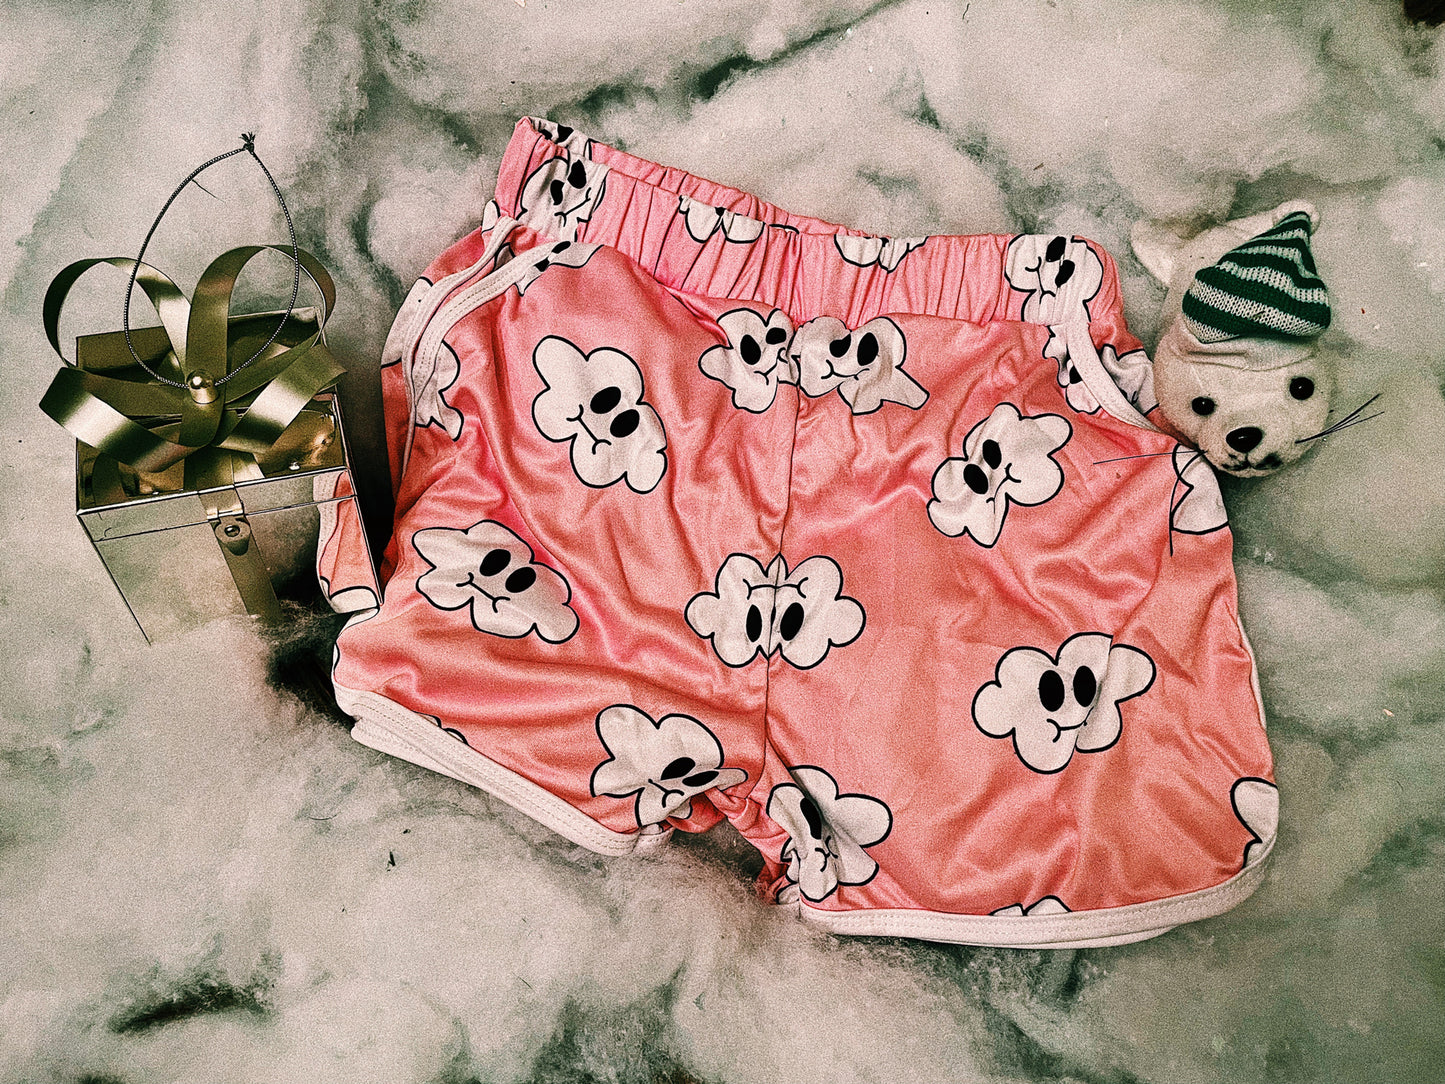 *Pink* Cloudy Boy Shorts